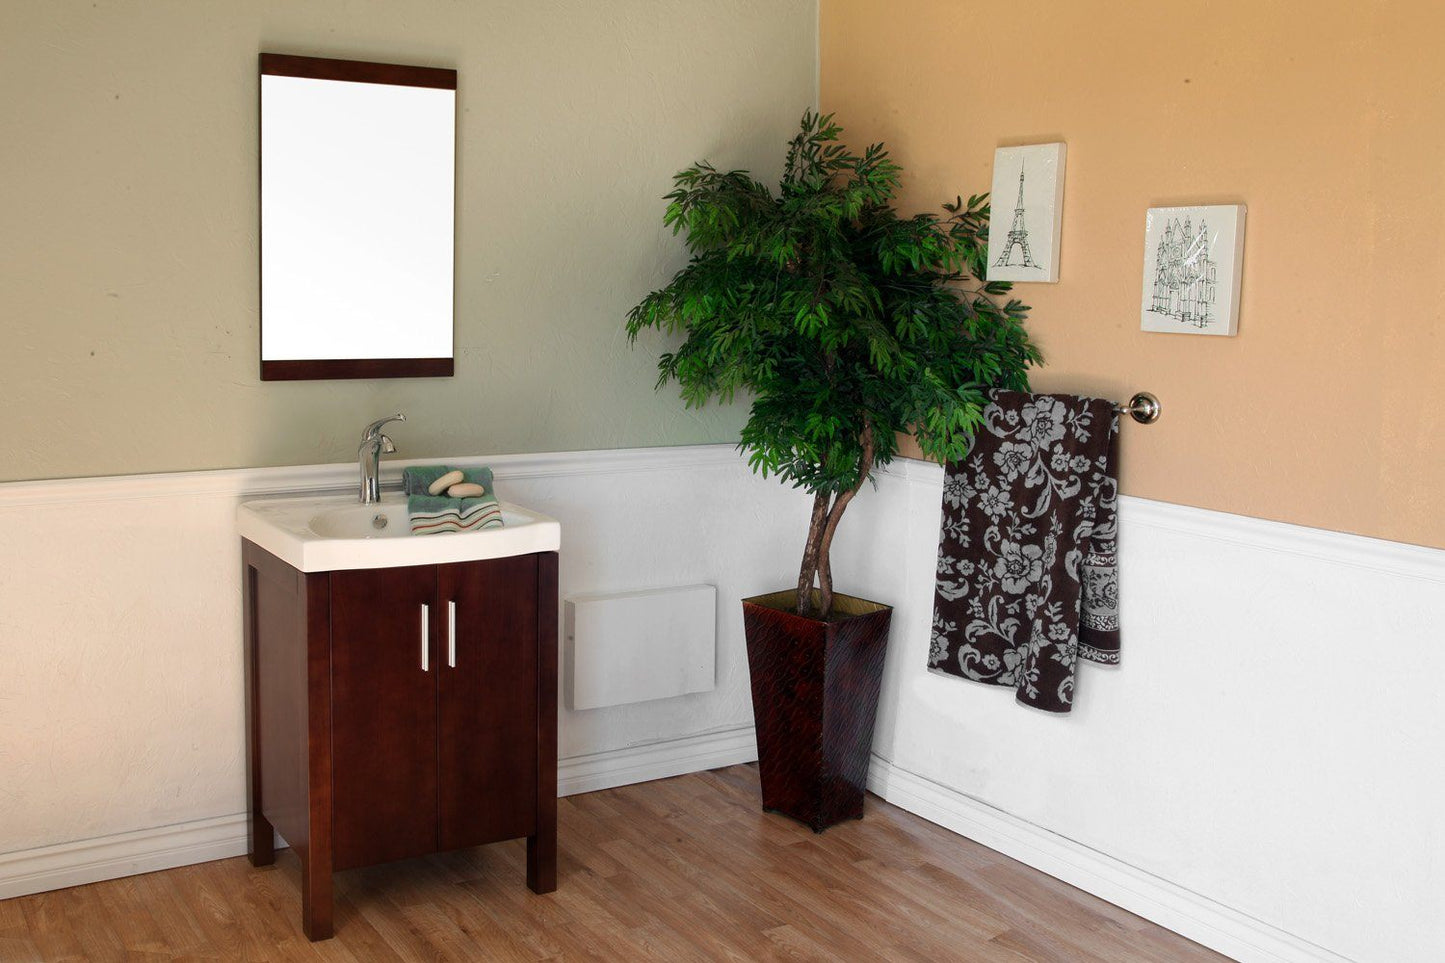 23.8" In Single Sink Vanity Wood Dark Walnut - Luxe Bathroom Vanities